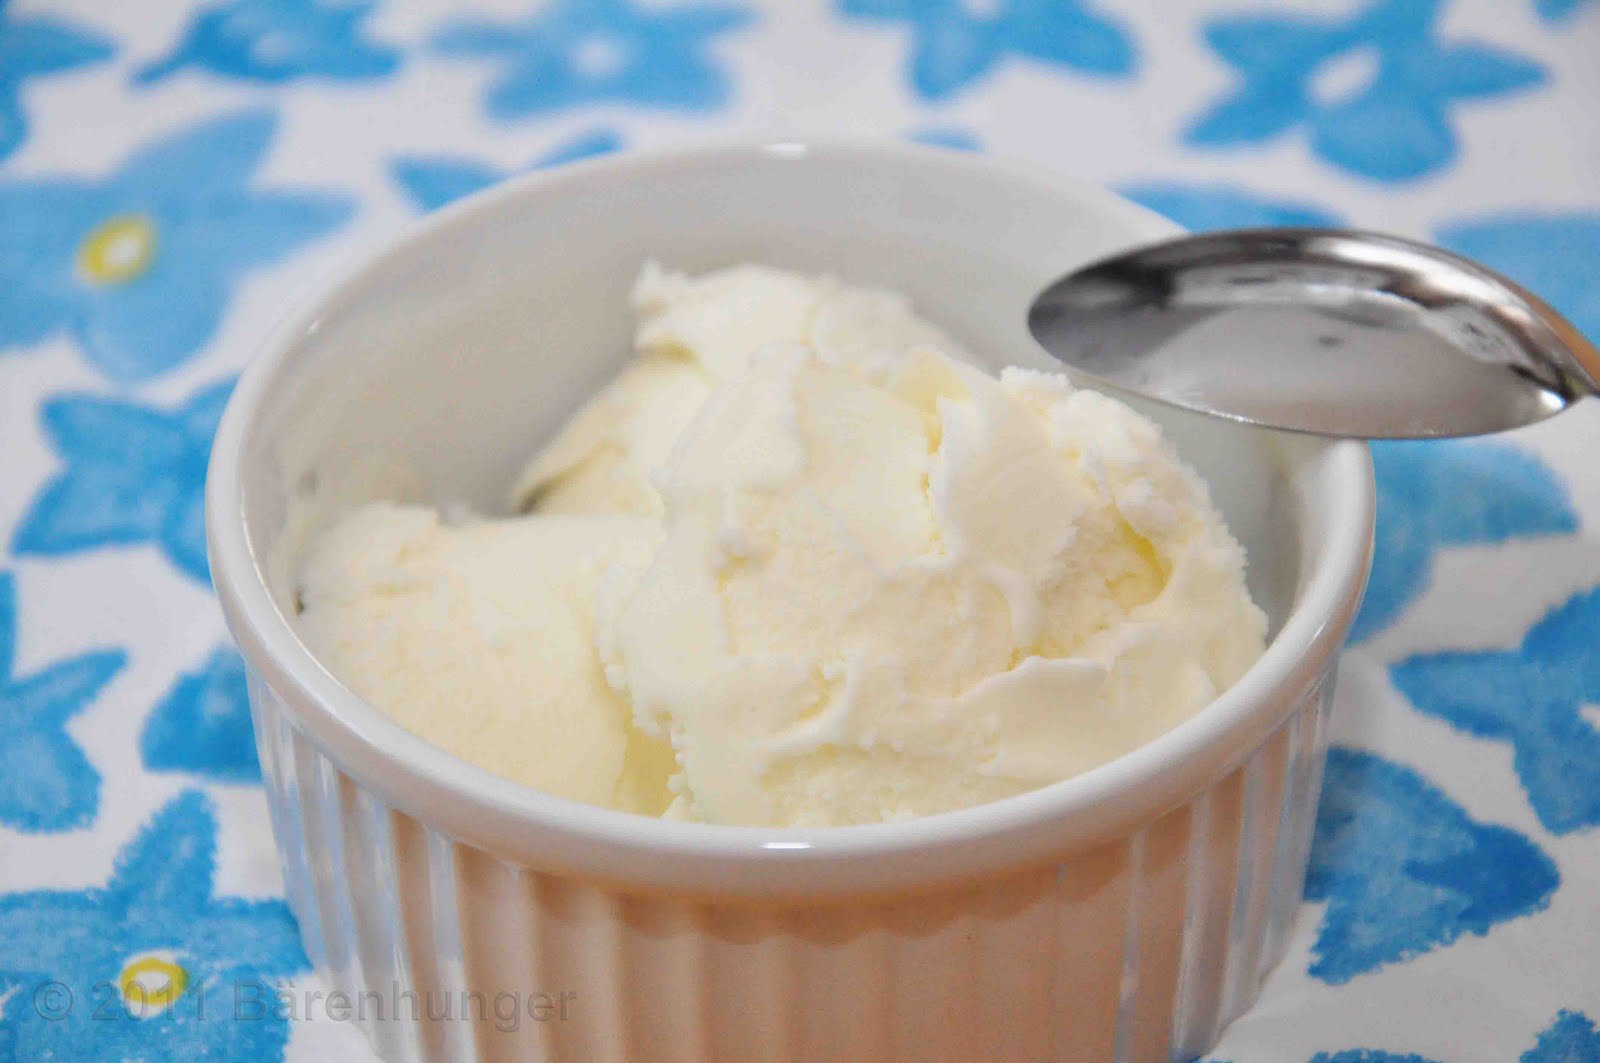 Buttermilch Zitronen Eis | Bärenhunger